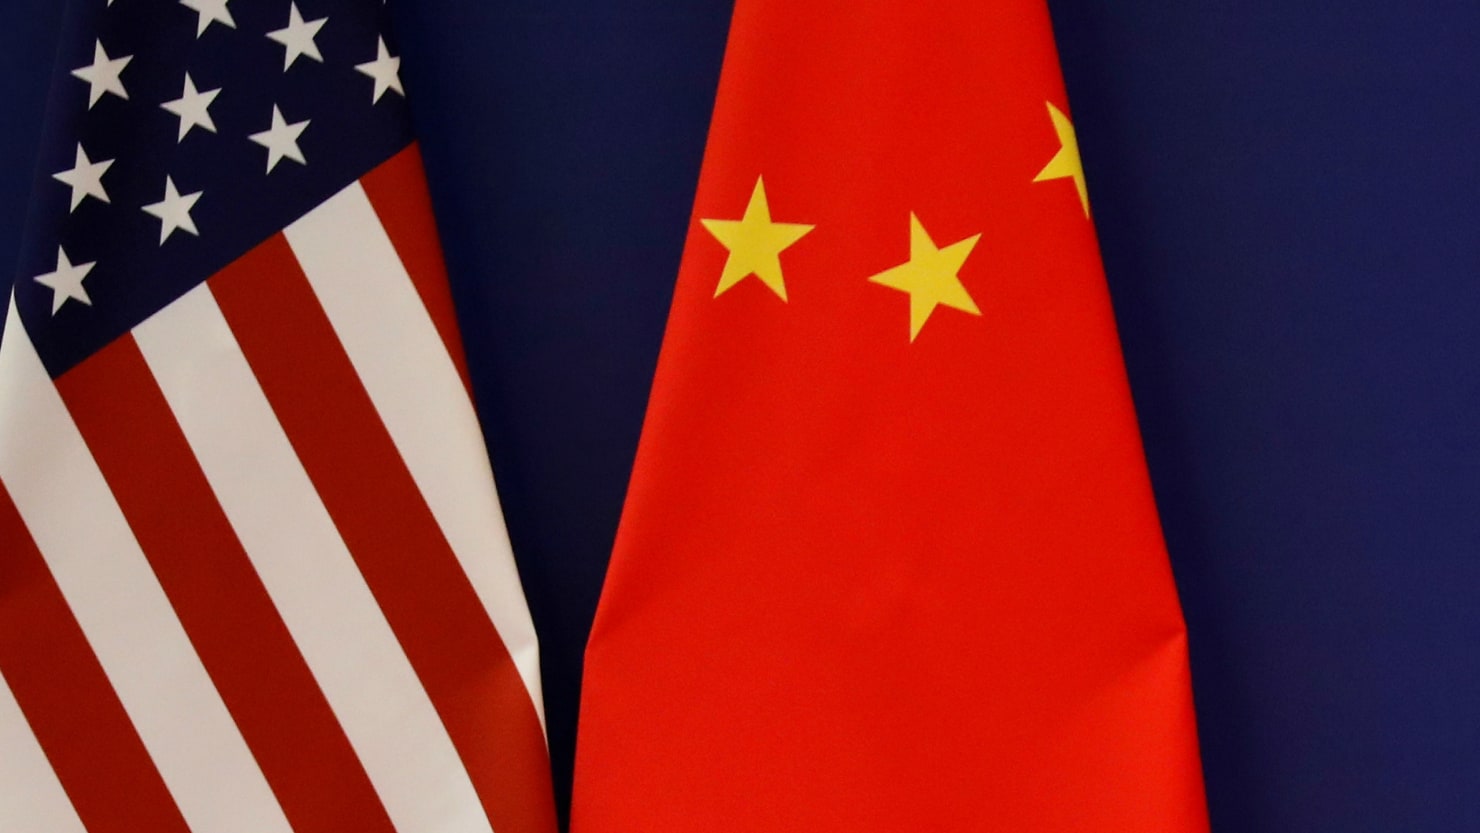 Американо-китайские отношения. Флаг США И Китая. КНР И США флаги. Американо-китайские отношения история. Китай аляска